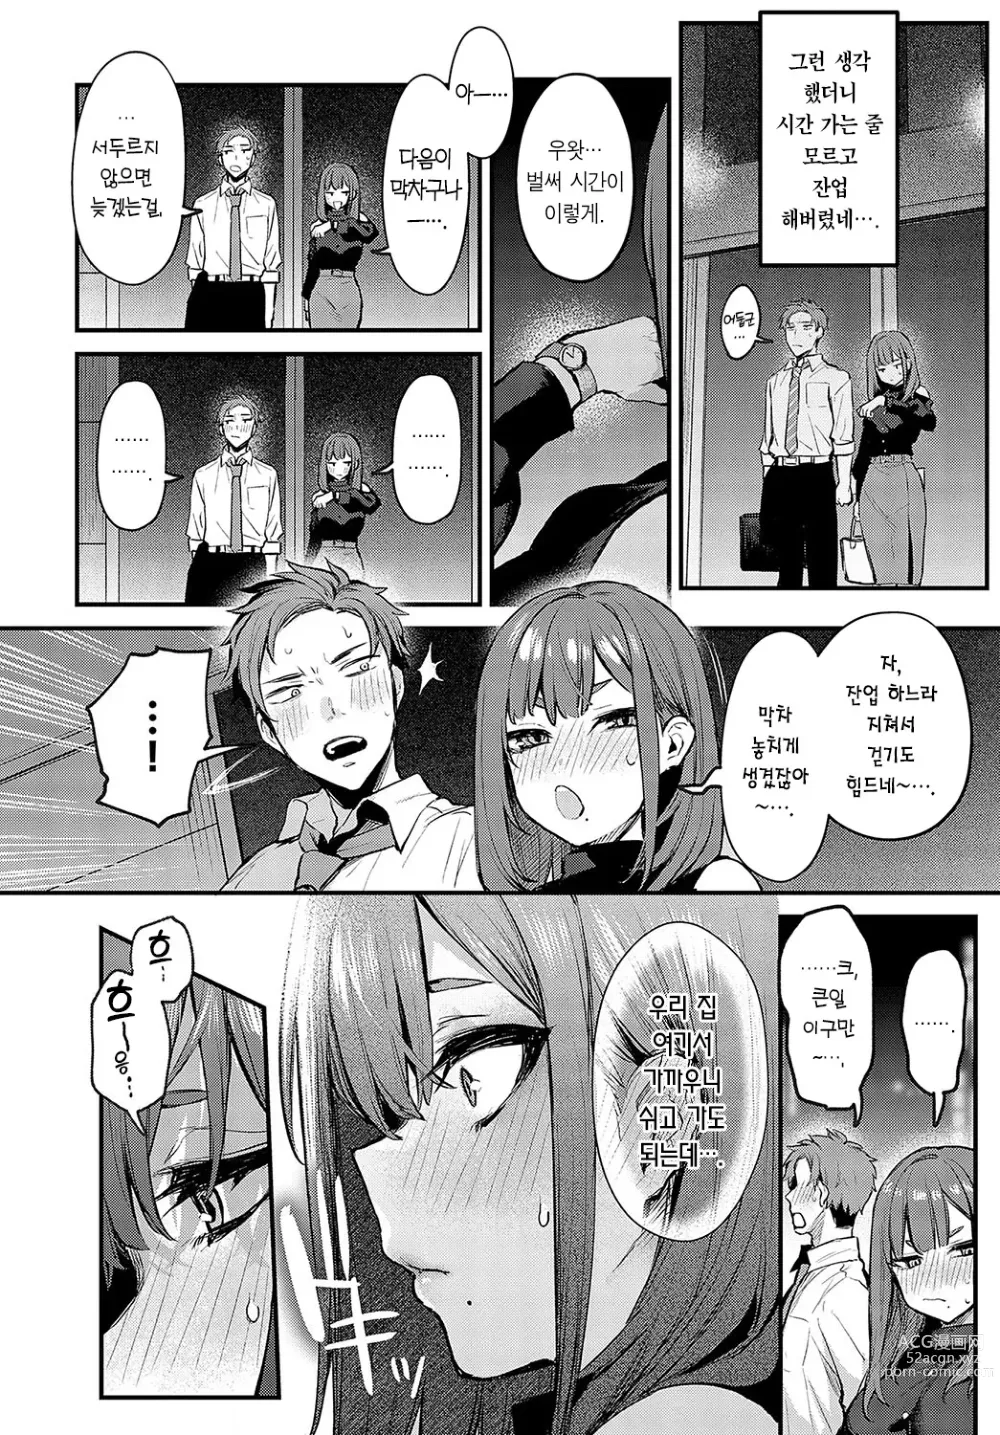 Page 11 of manga 한 번 더, 해보고 싶어.